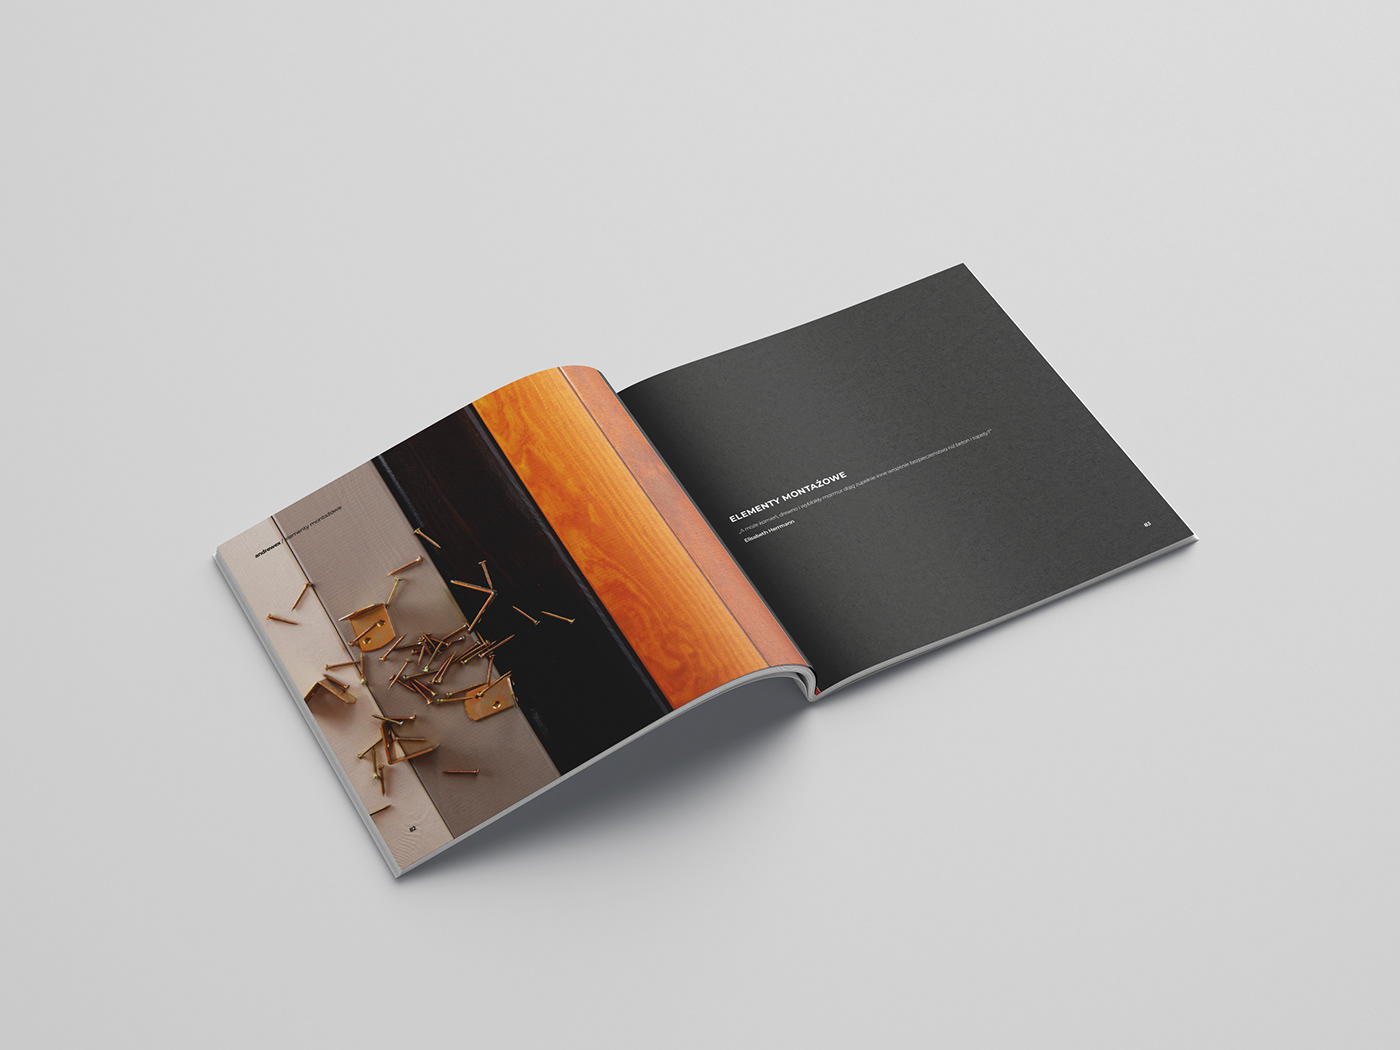 andrewex brand catalog Catalogue dtp Project